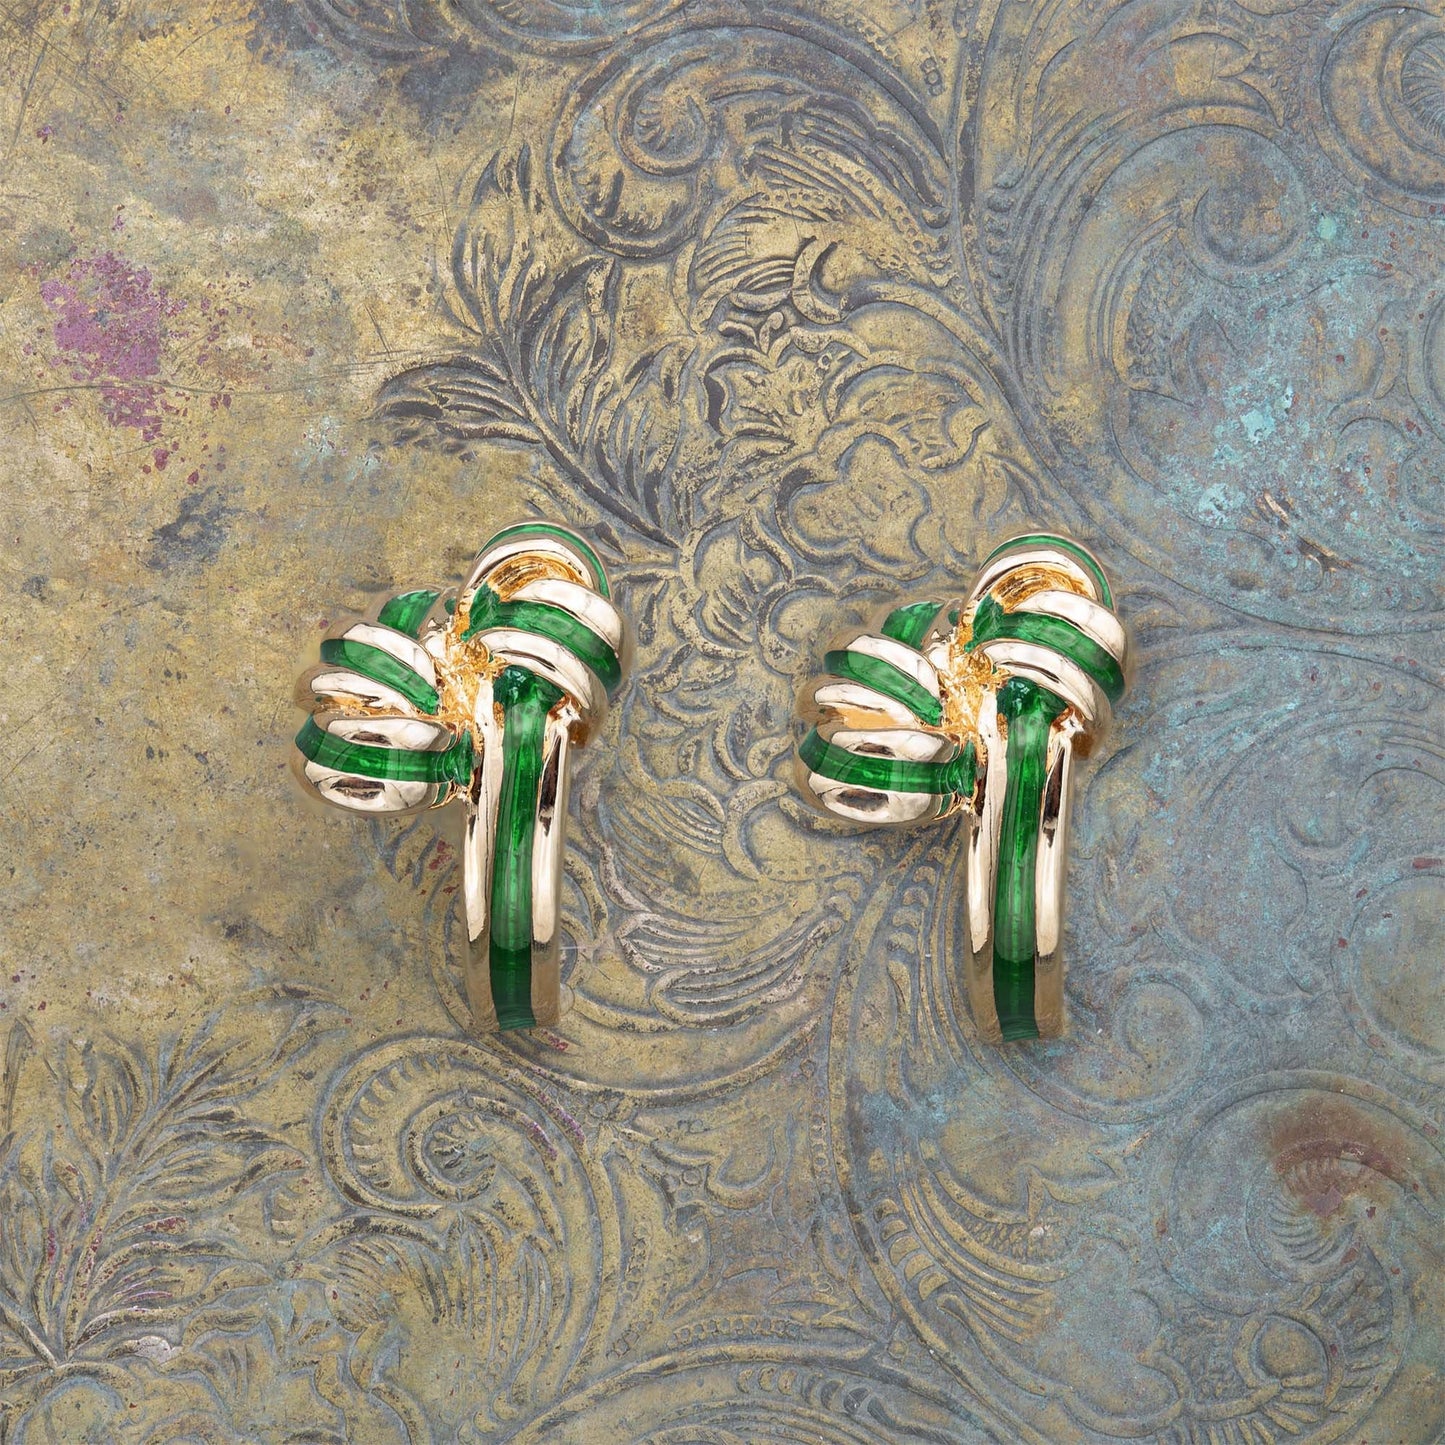 Vintage Mid Century Gold and Green Enamel Post Earrings Handmade Womans Earrings E4186-G - Limited Stock - Never Worn